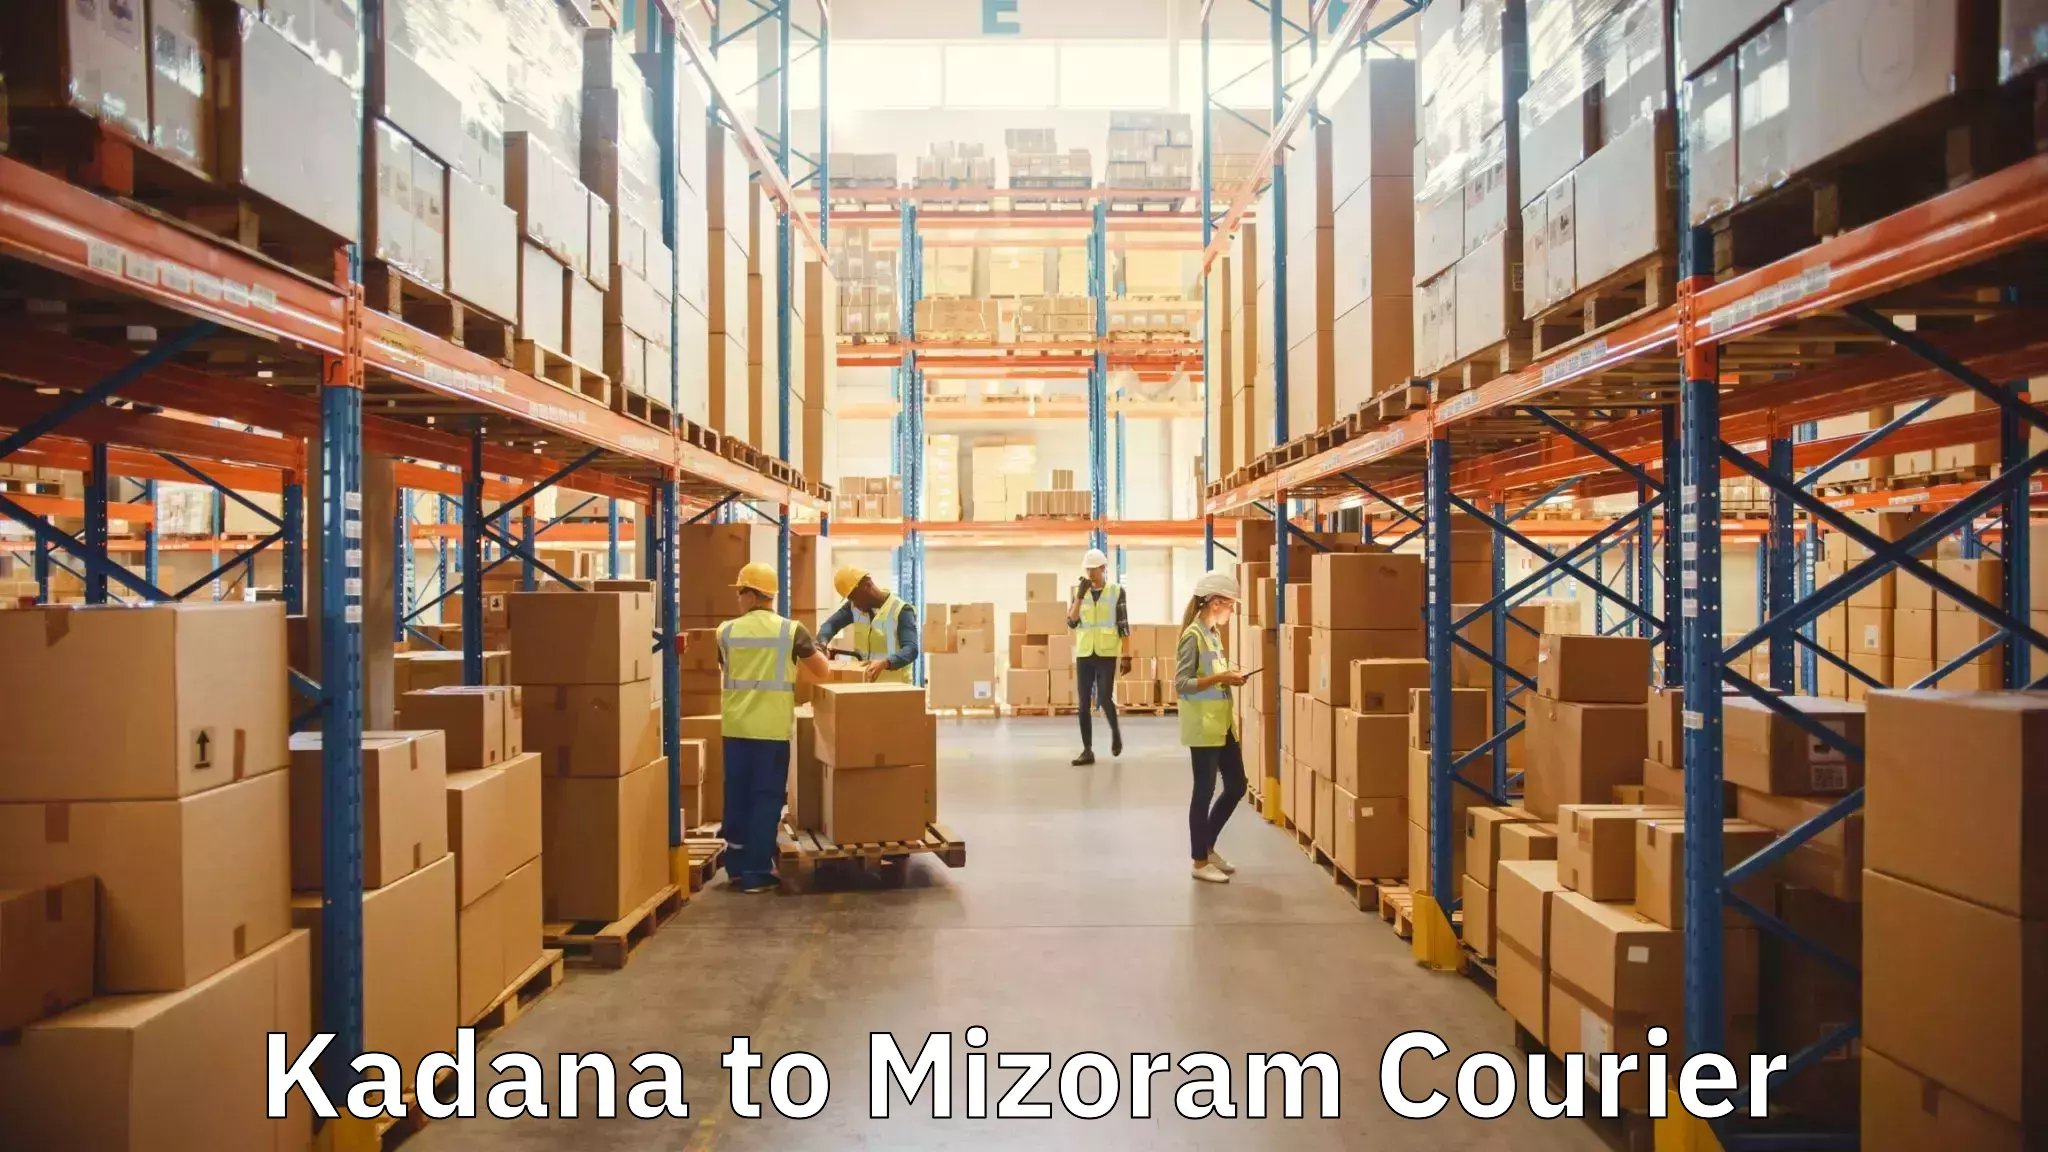 Moving and packing experts Kadana to Mizoram